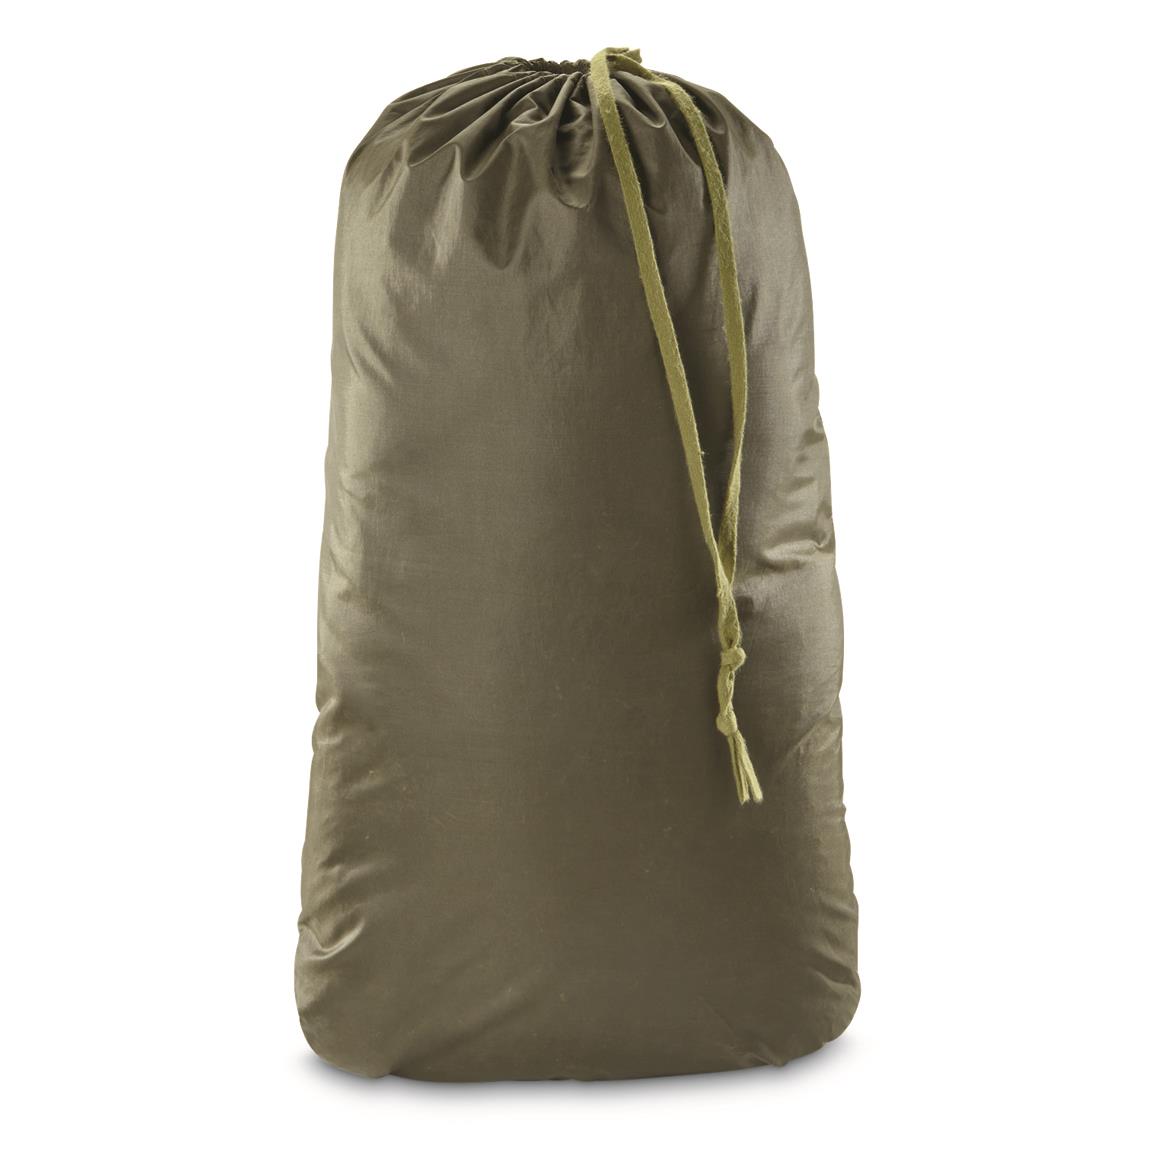 British Military Surplus Nylon Laundry Bags, 2 Pack, Used